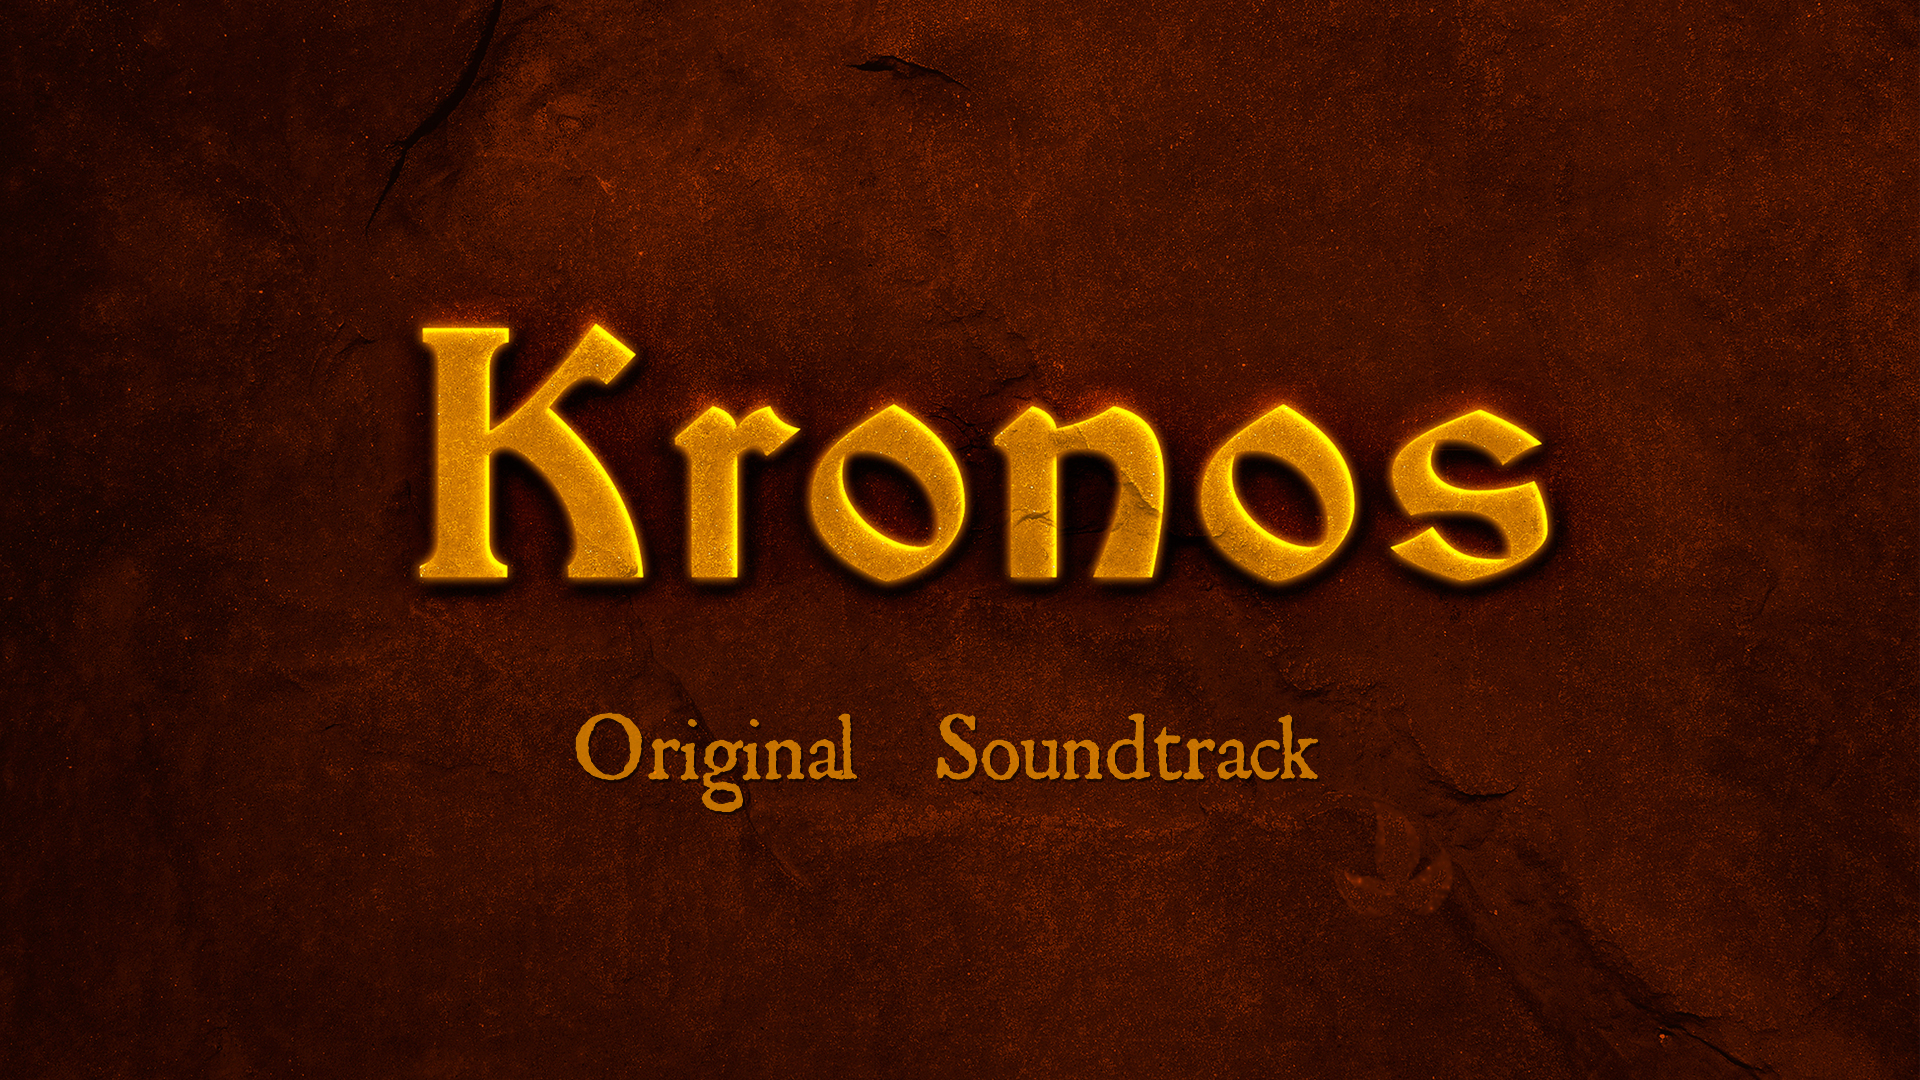 Kronos - Soundtrack DLC Steam CD Key 0.44 USD